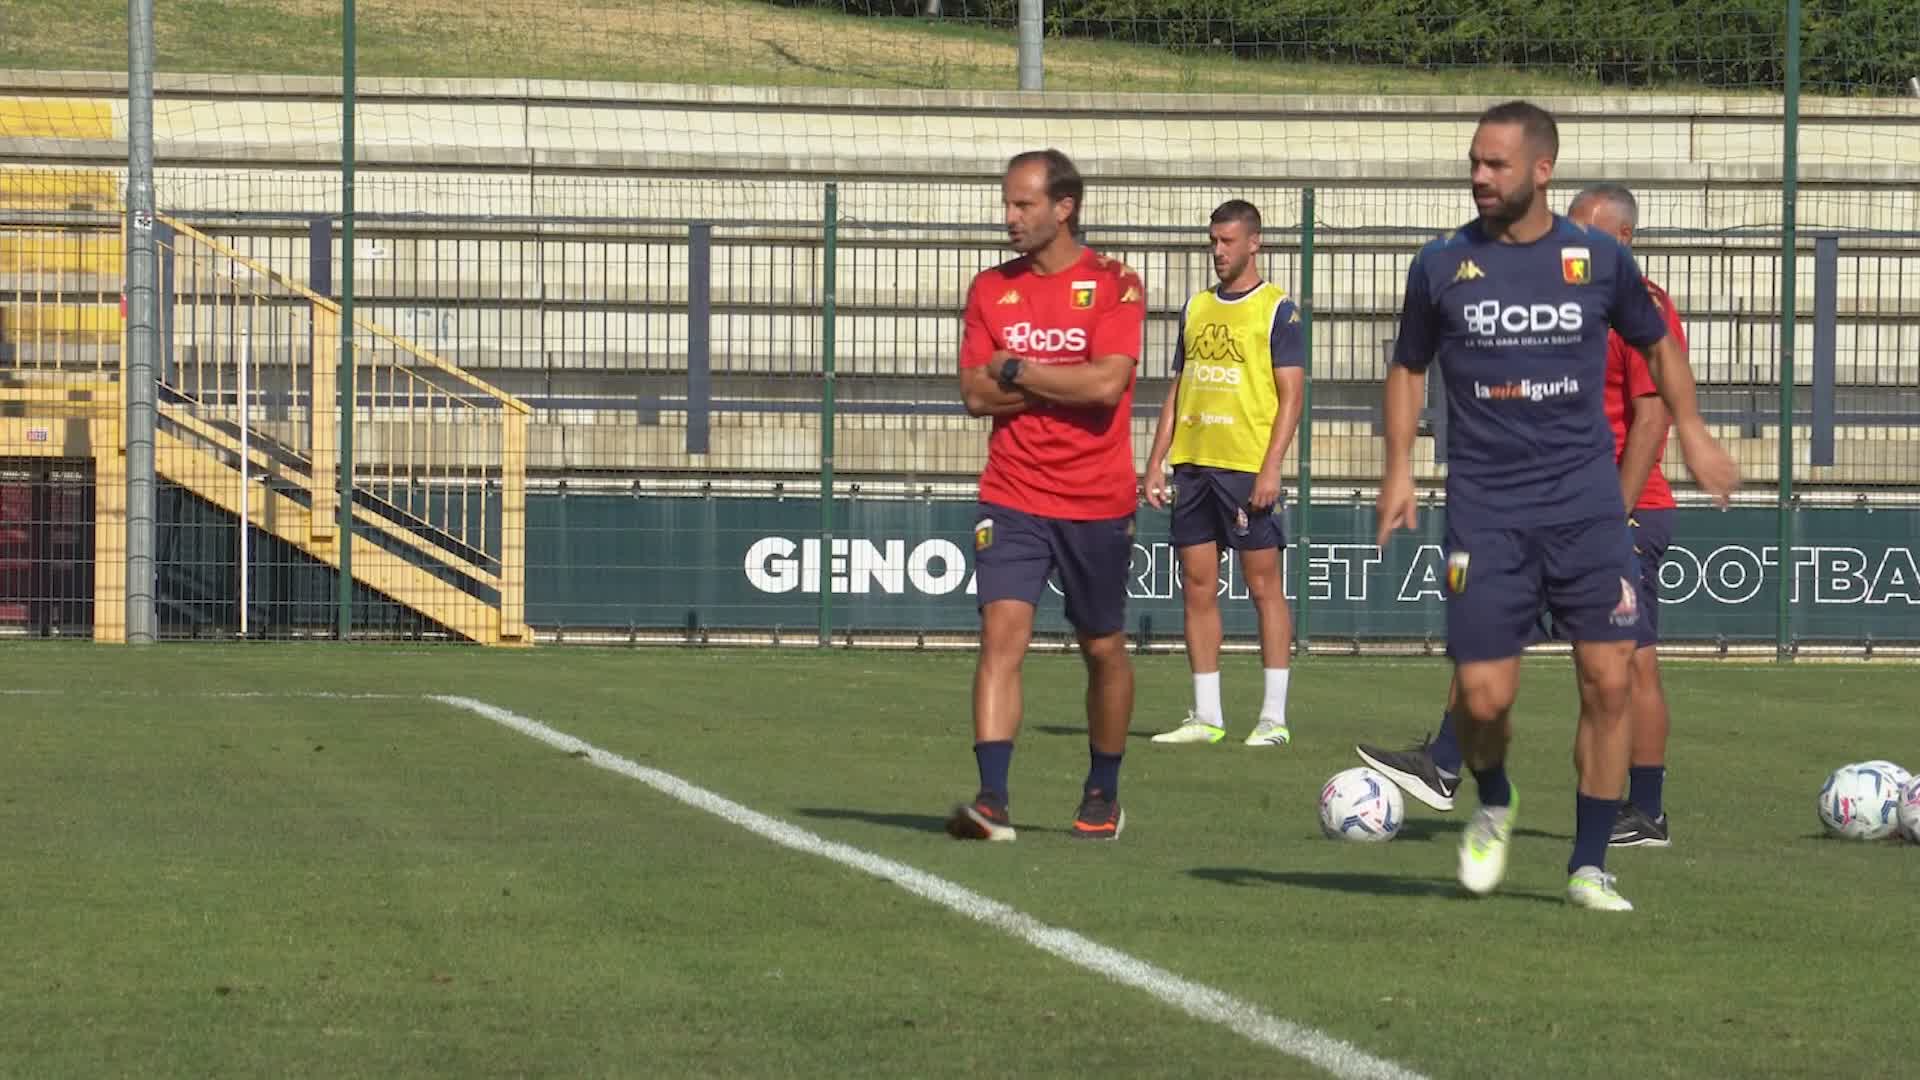 Atalanta-Genoa, Onofri: "Assenze pesanti Koopmeiners e Retegui, ma partita equilibrata"